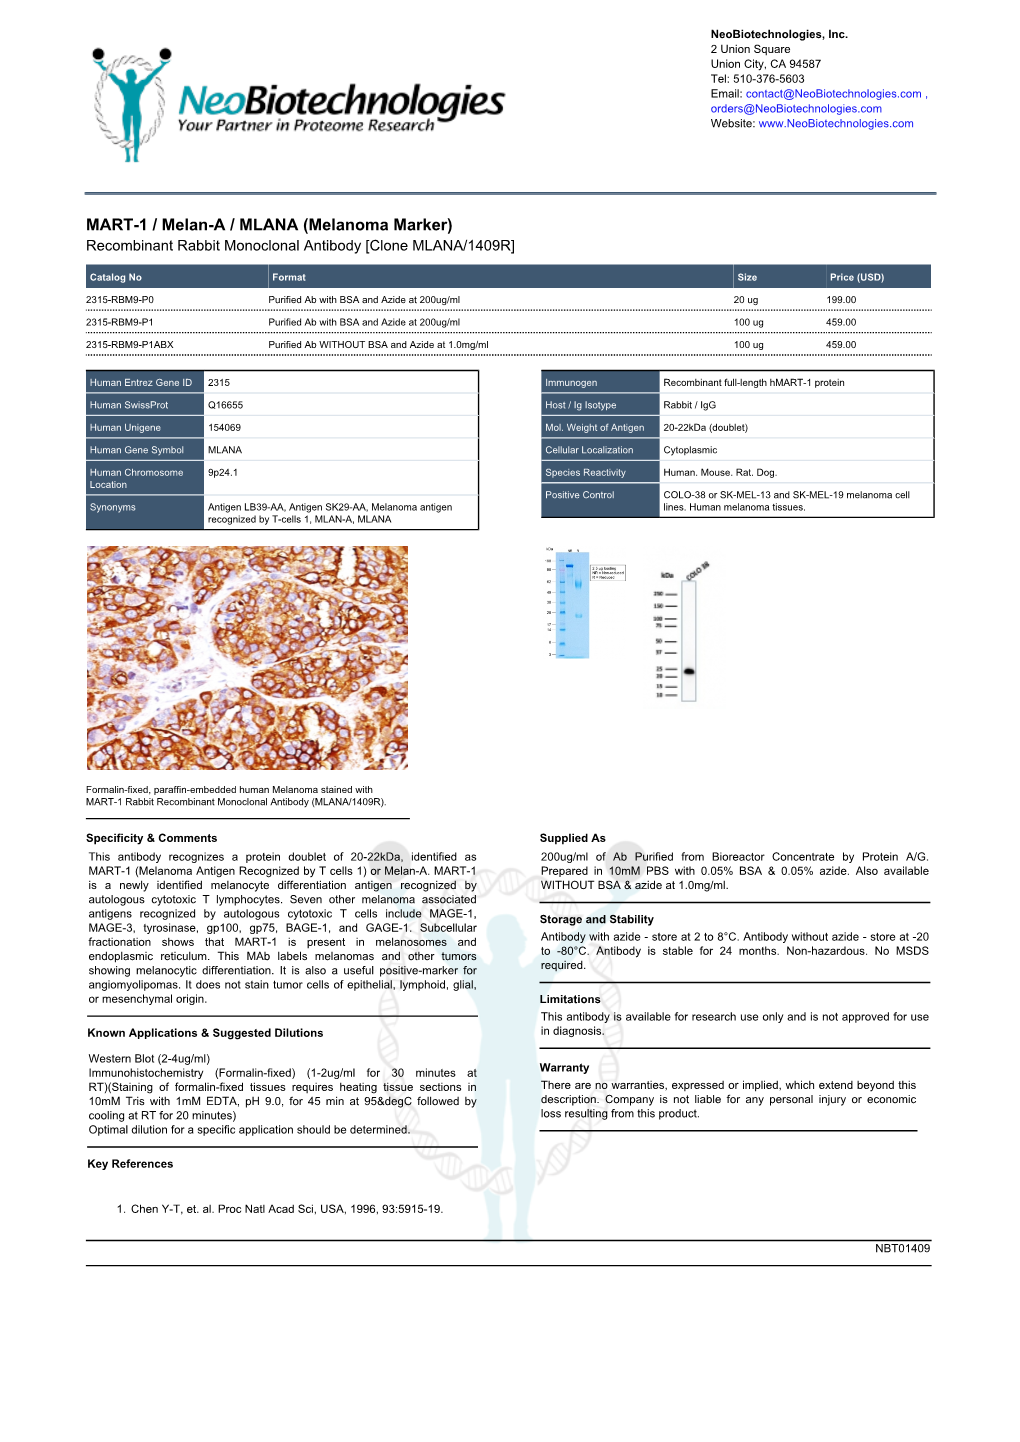 MART-1 / Melan-A / MLANA (Melanoma Marker) Recombinant Rabbit Monoclonal Antibody [Clone MLANA/1409R]